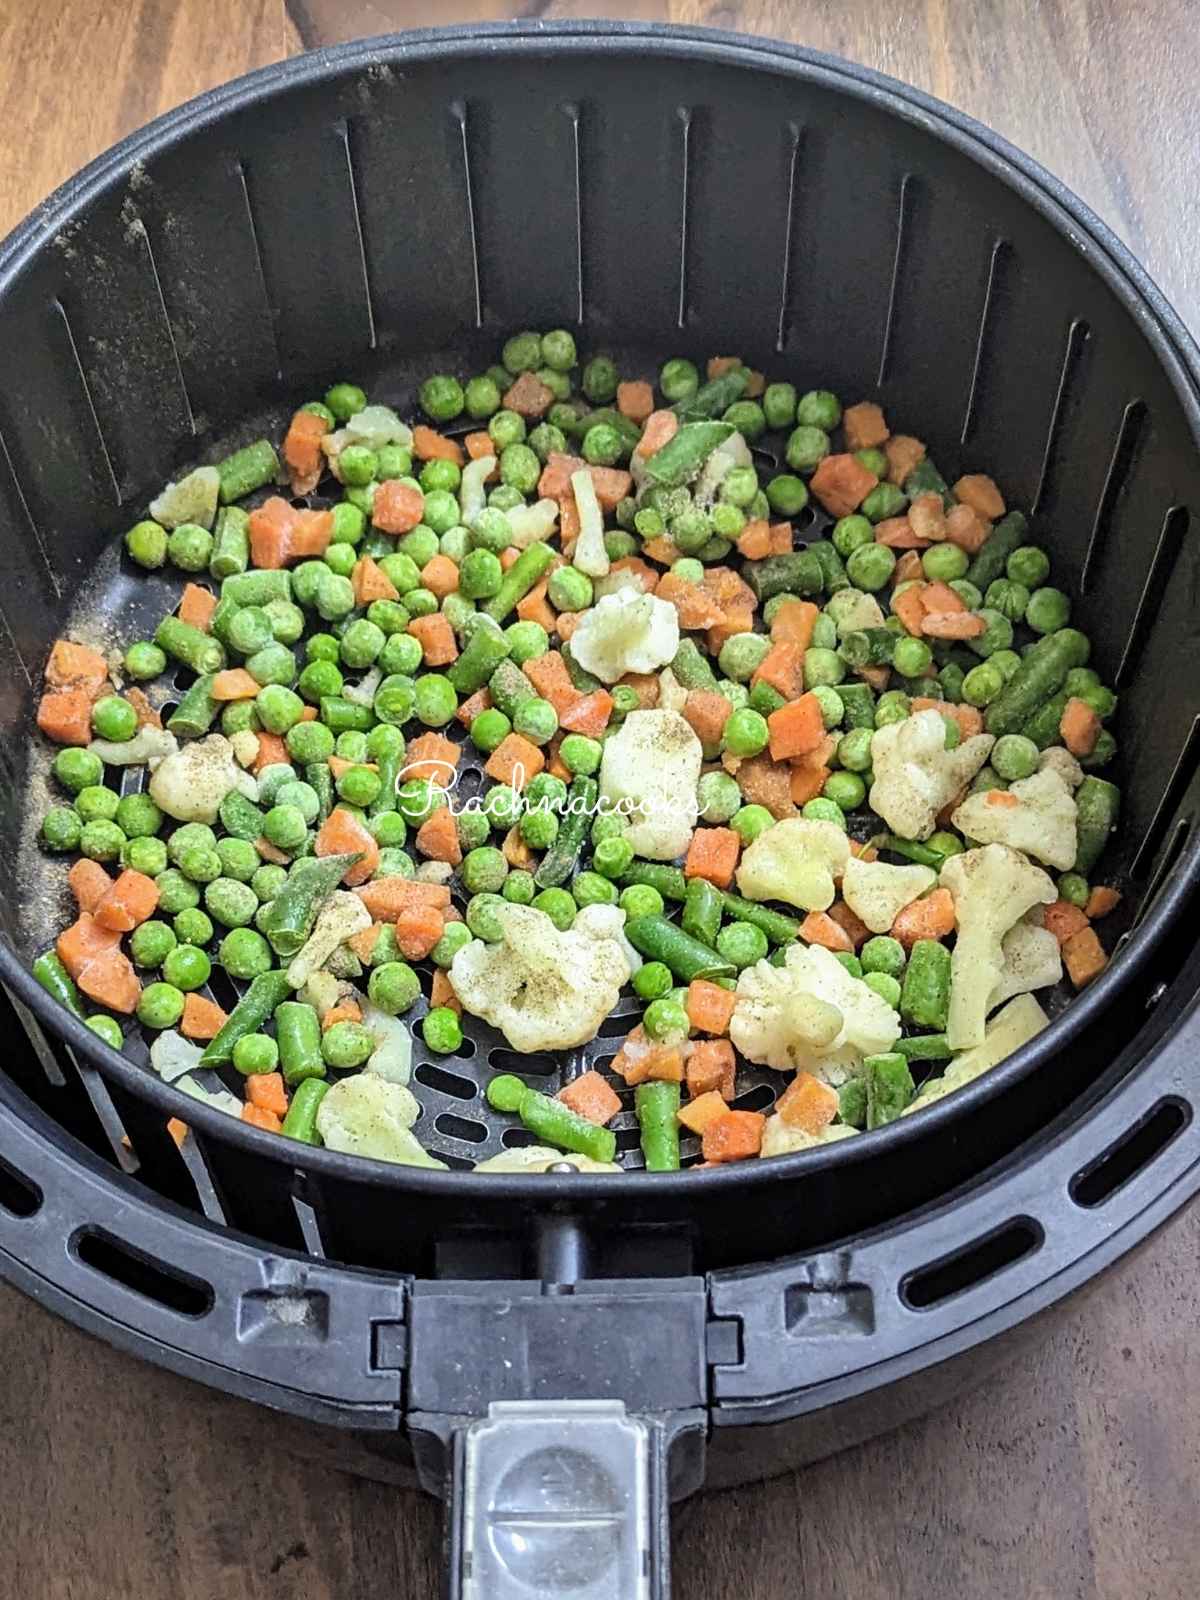 Frozen vegetables in air fryer basket